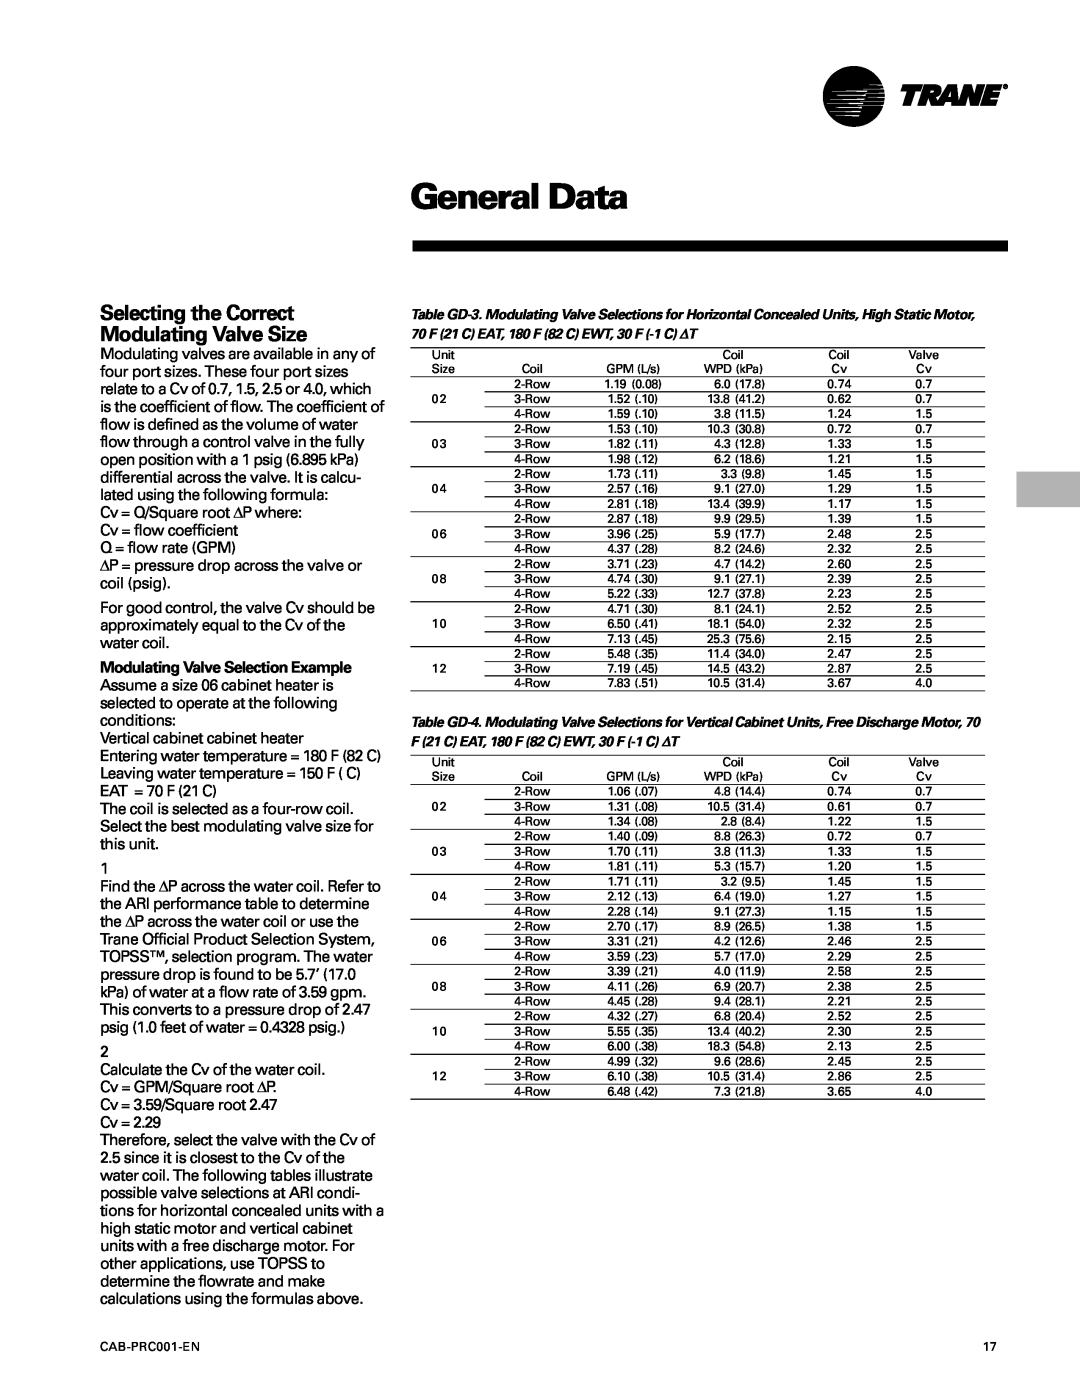 Trane CAB-PRC001-EN manual General Data, Selecting the Correct Modulating Valve Size 